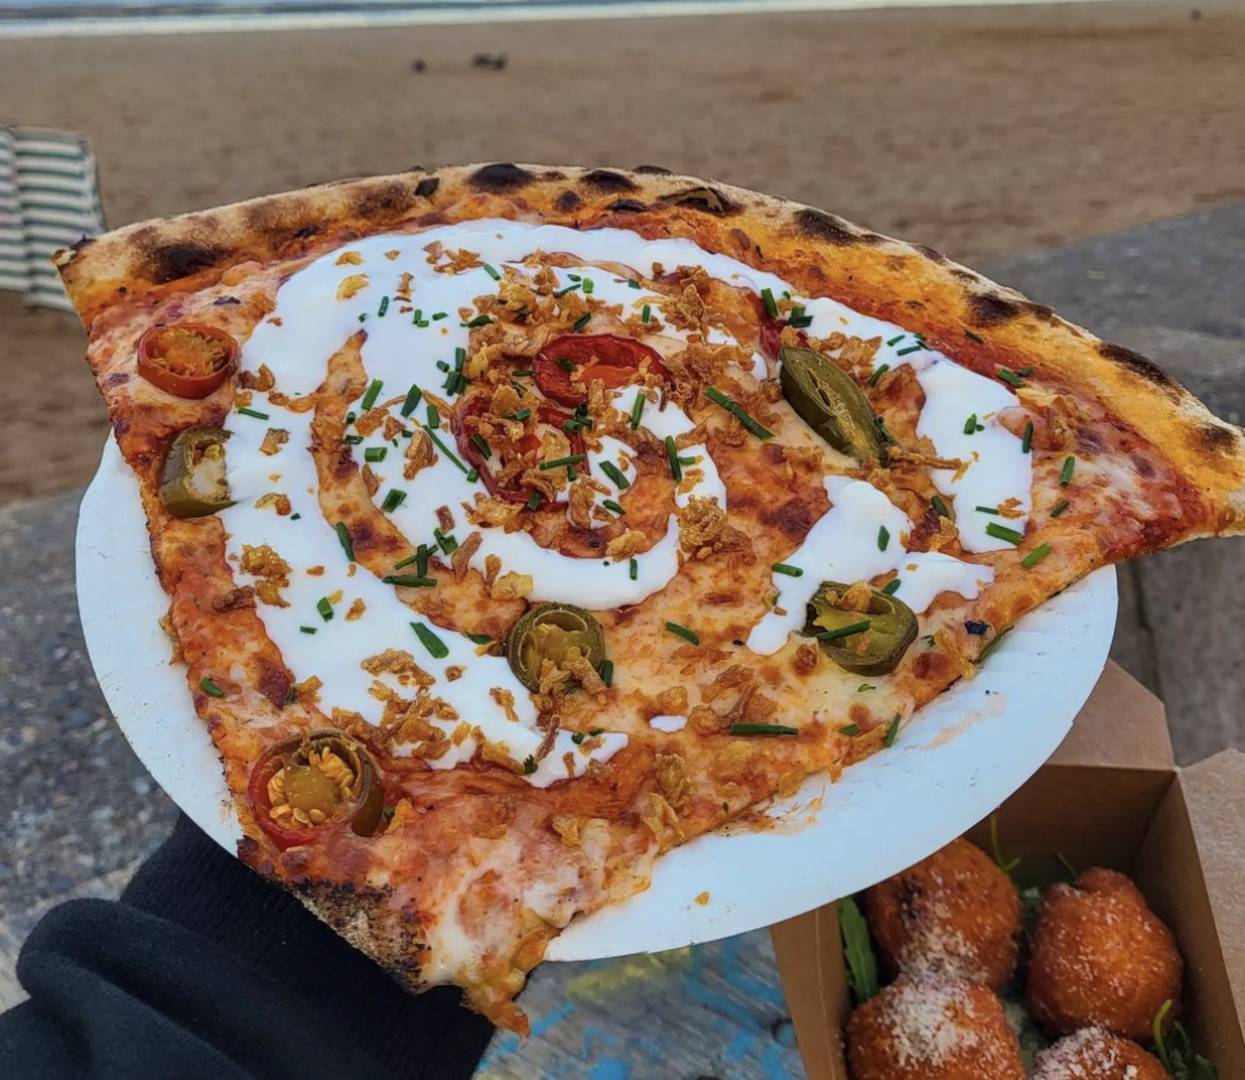 Large pizza slice